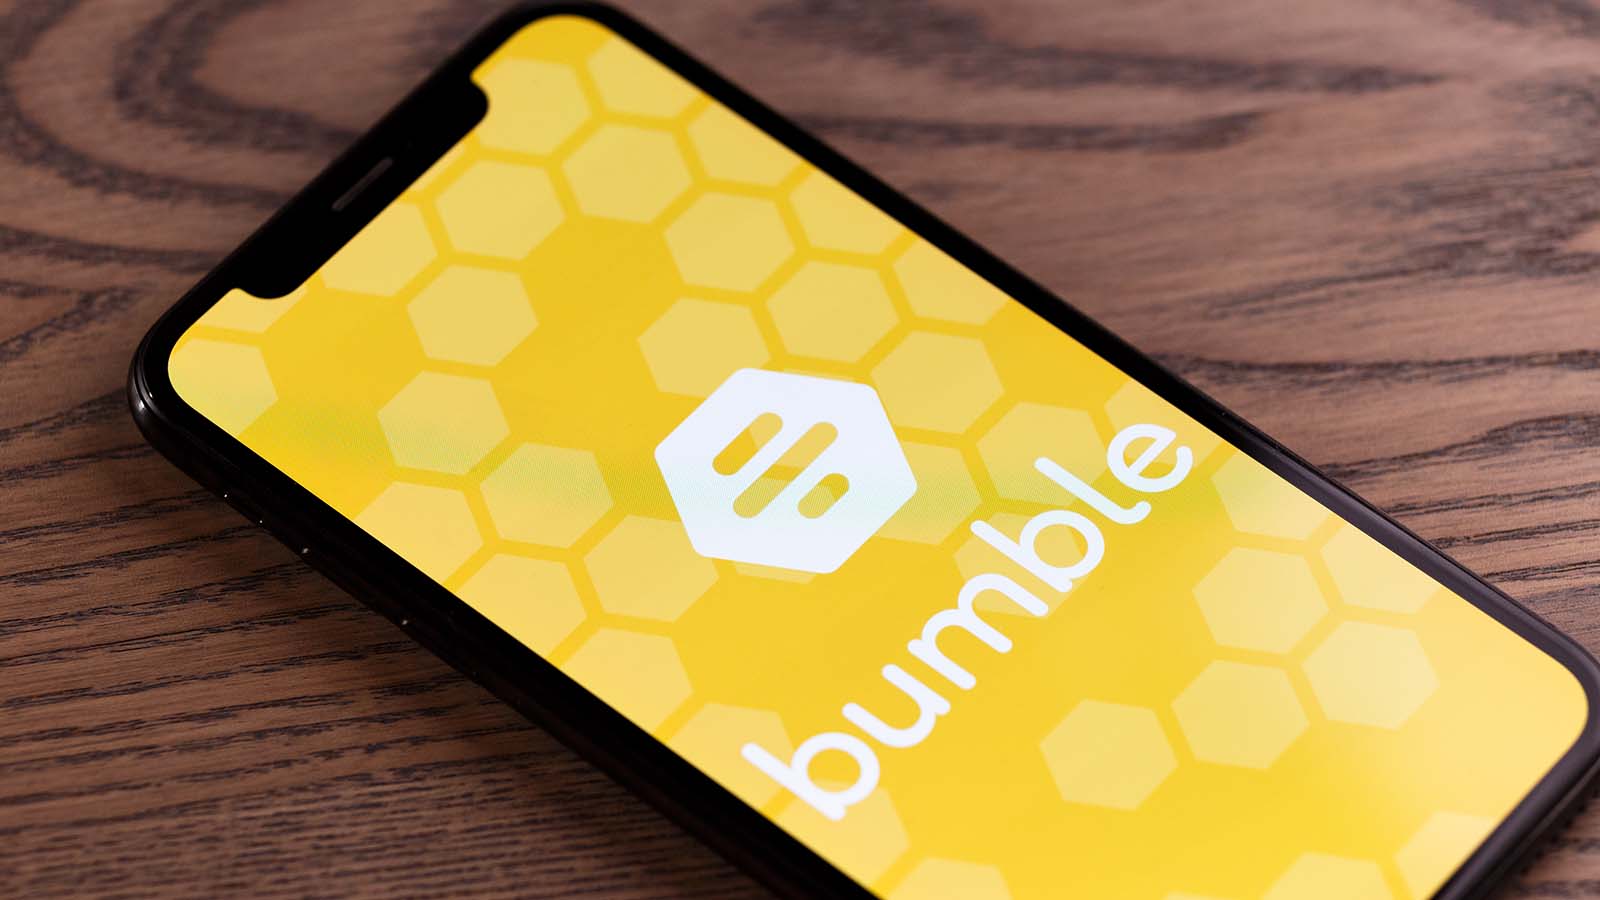 Bumble ipo stock price forex signal logo